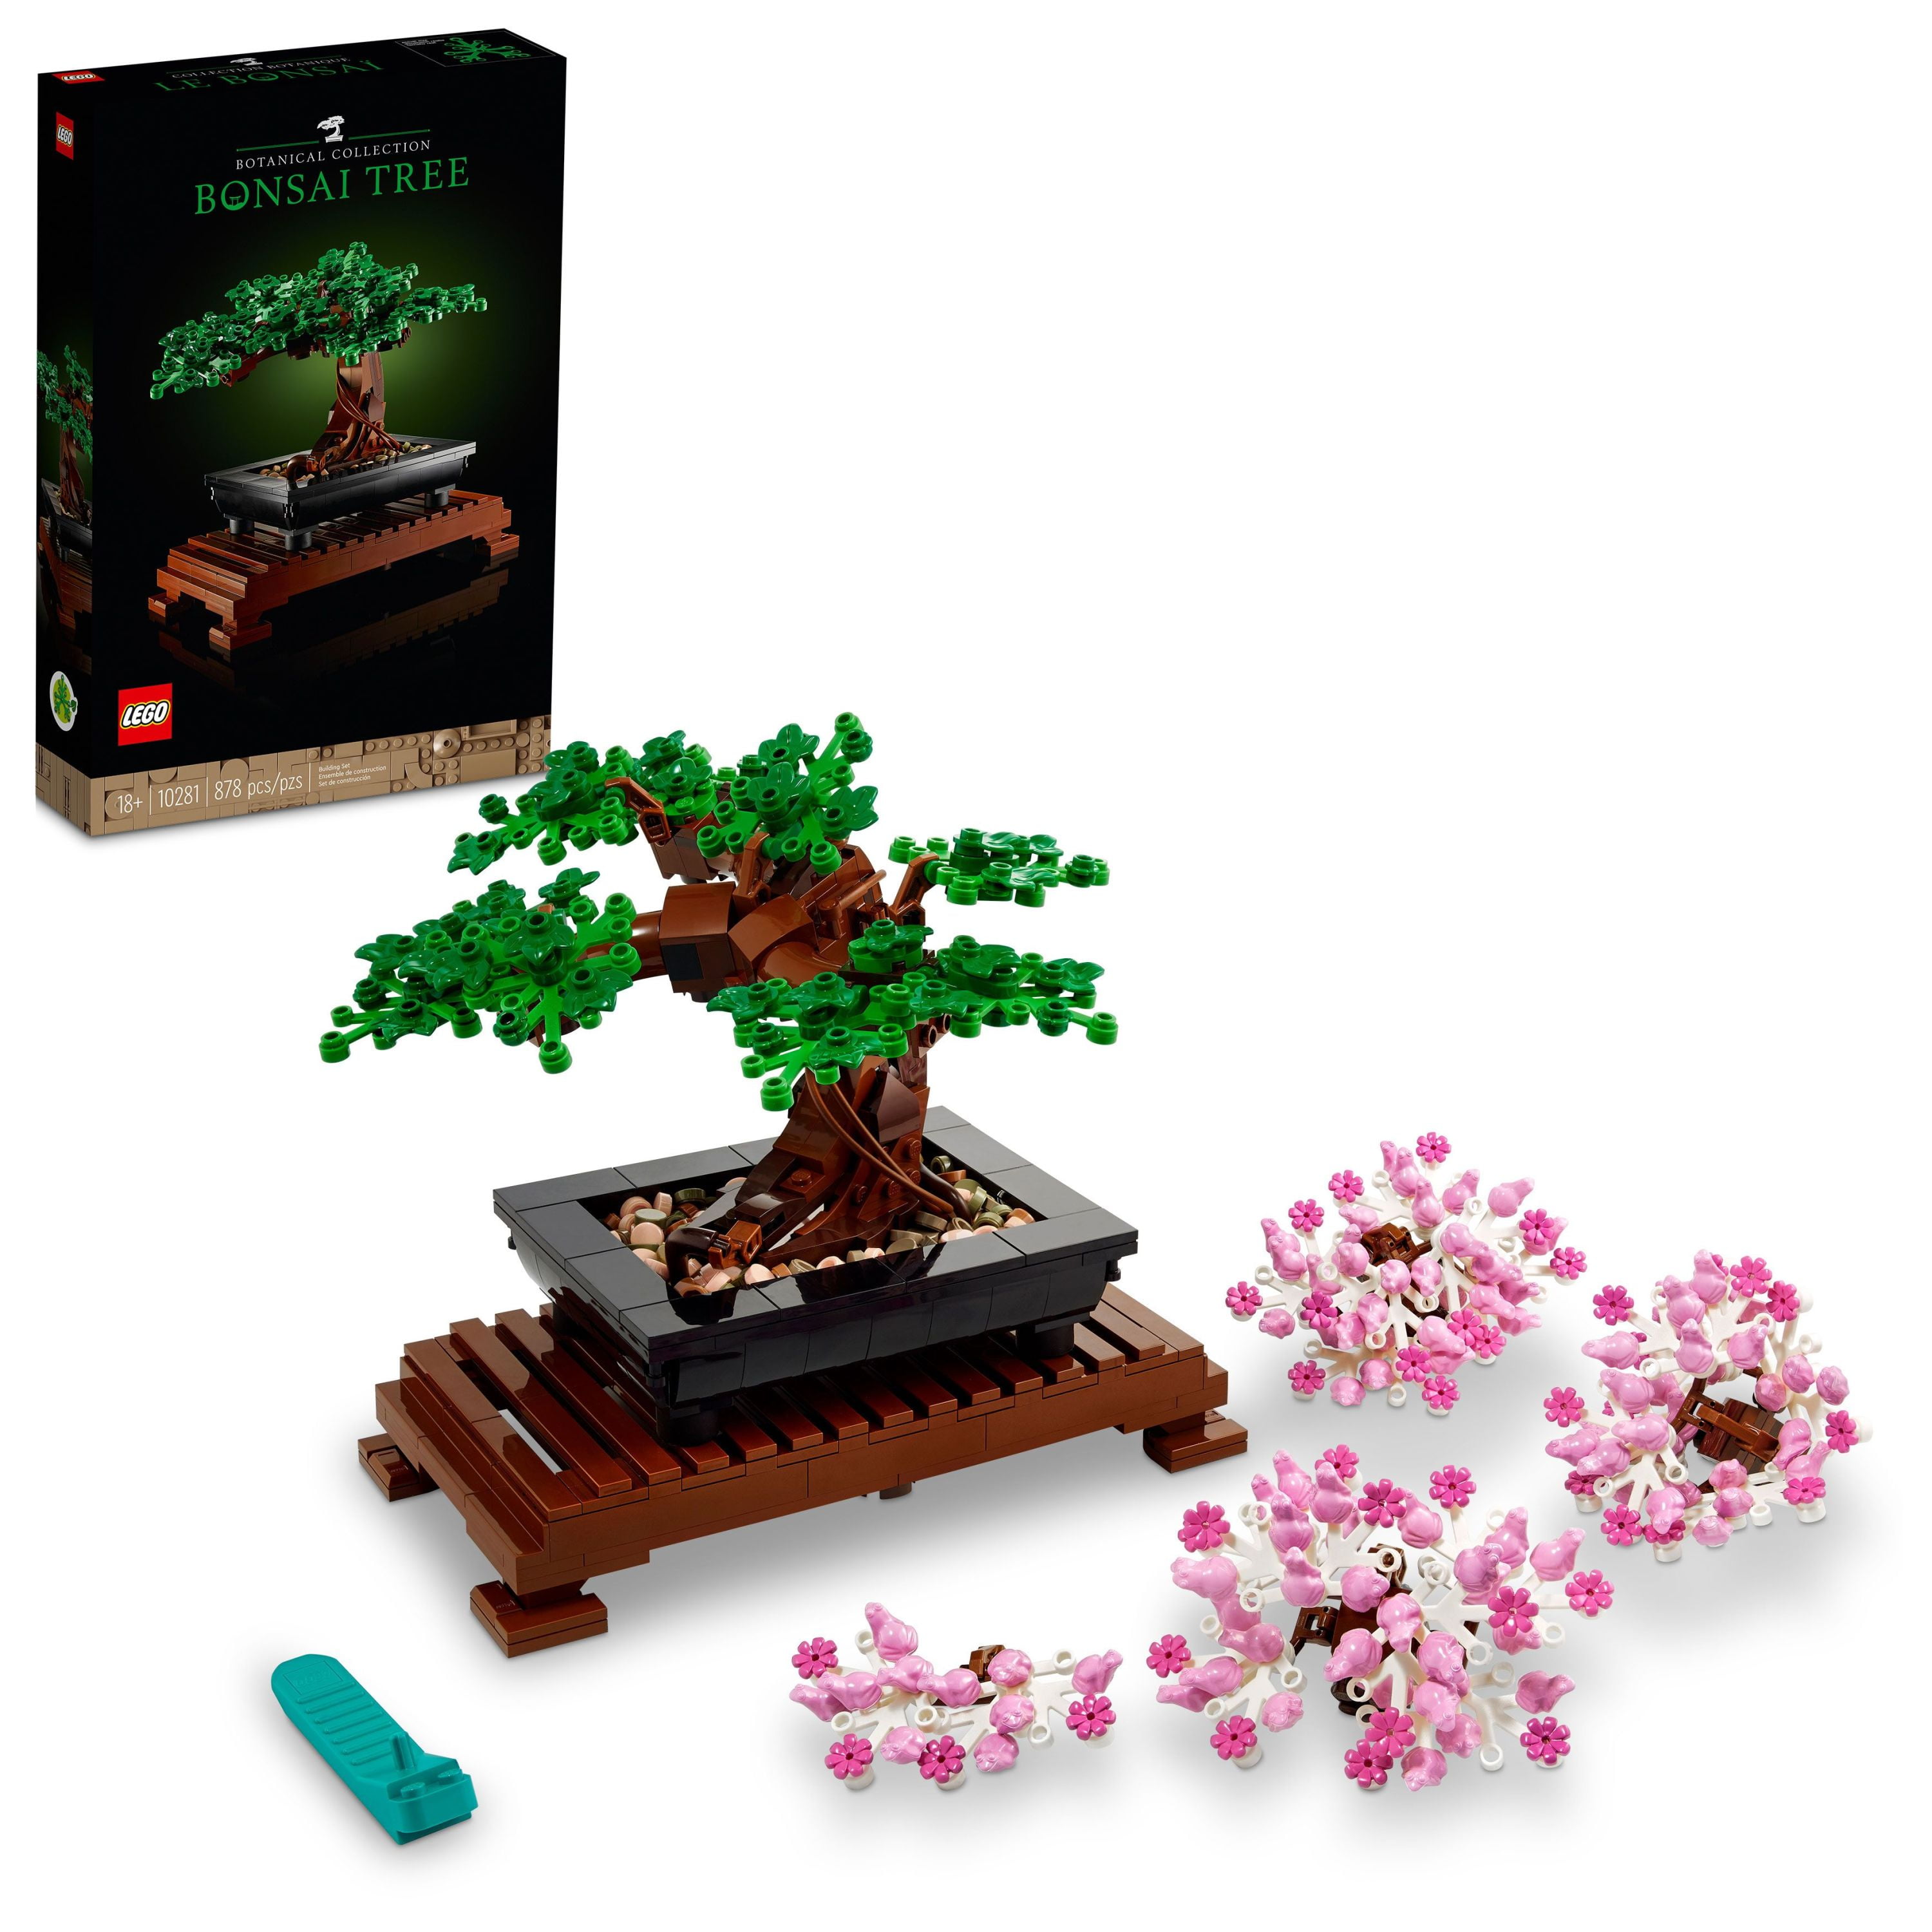 Spring Cactus  Lego flower, Lego creative, Lego craft